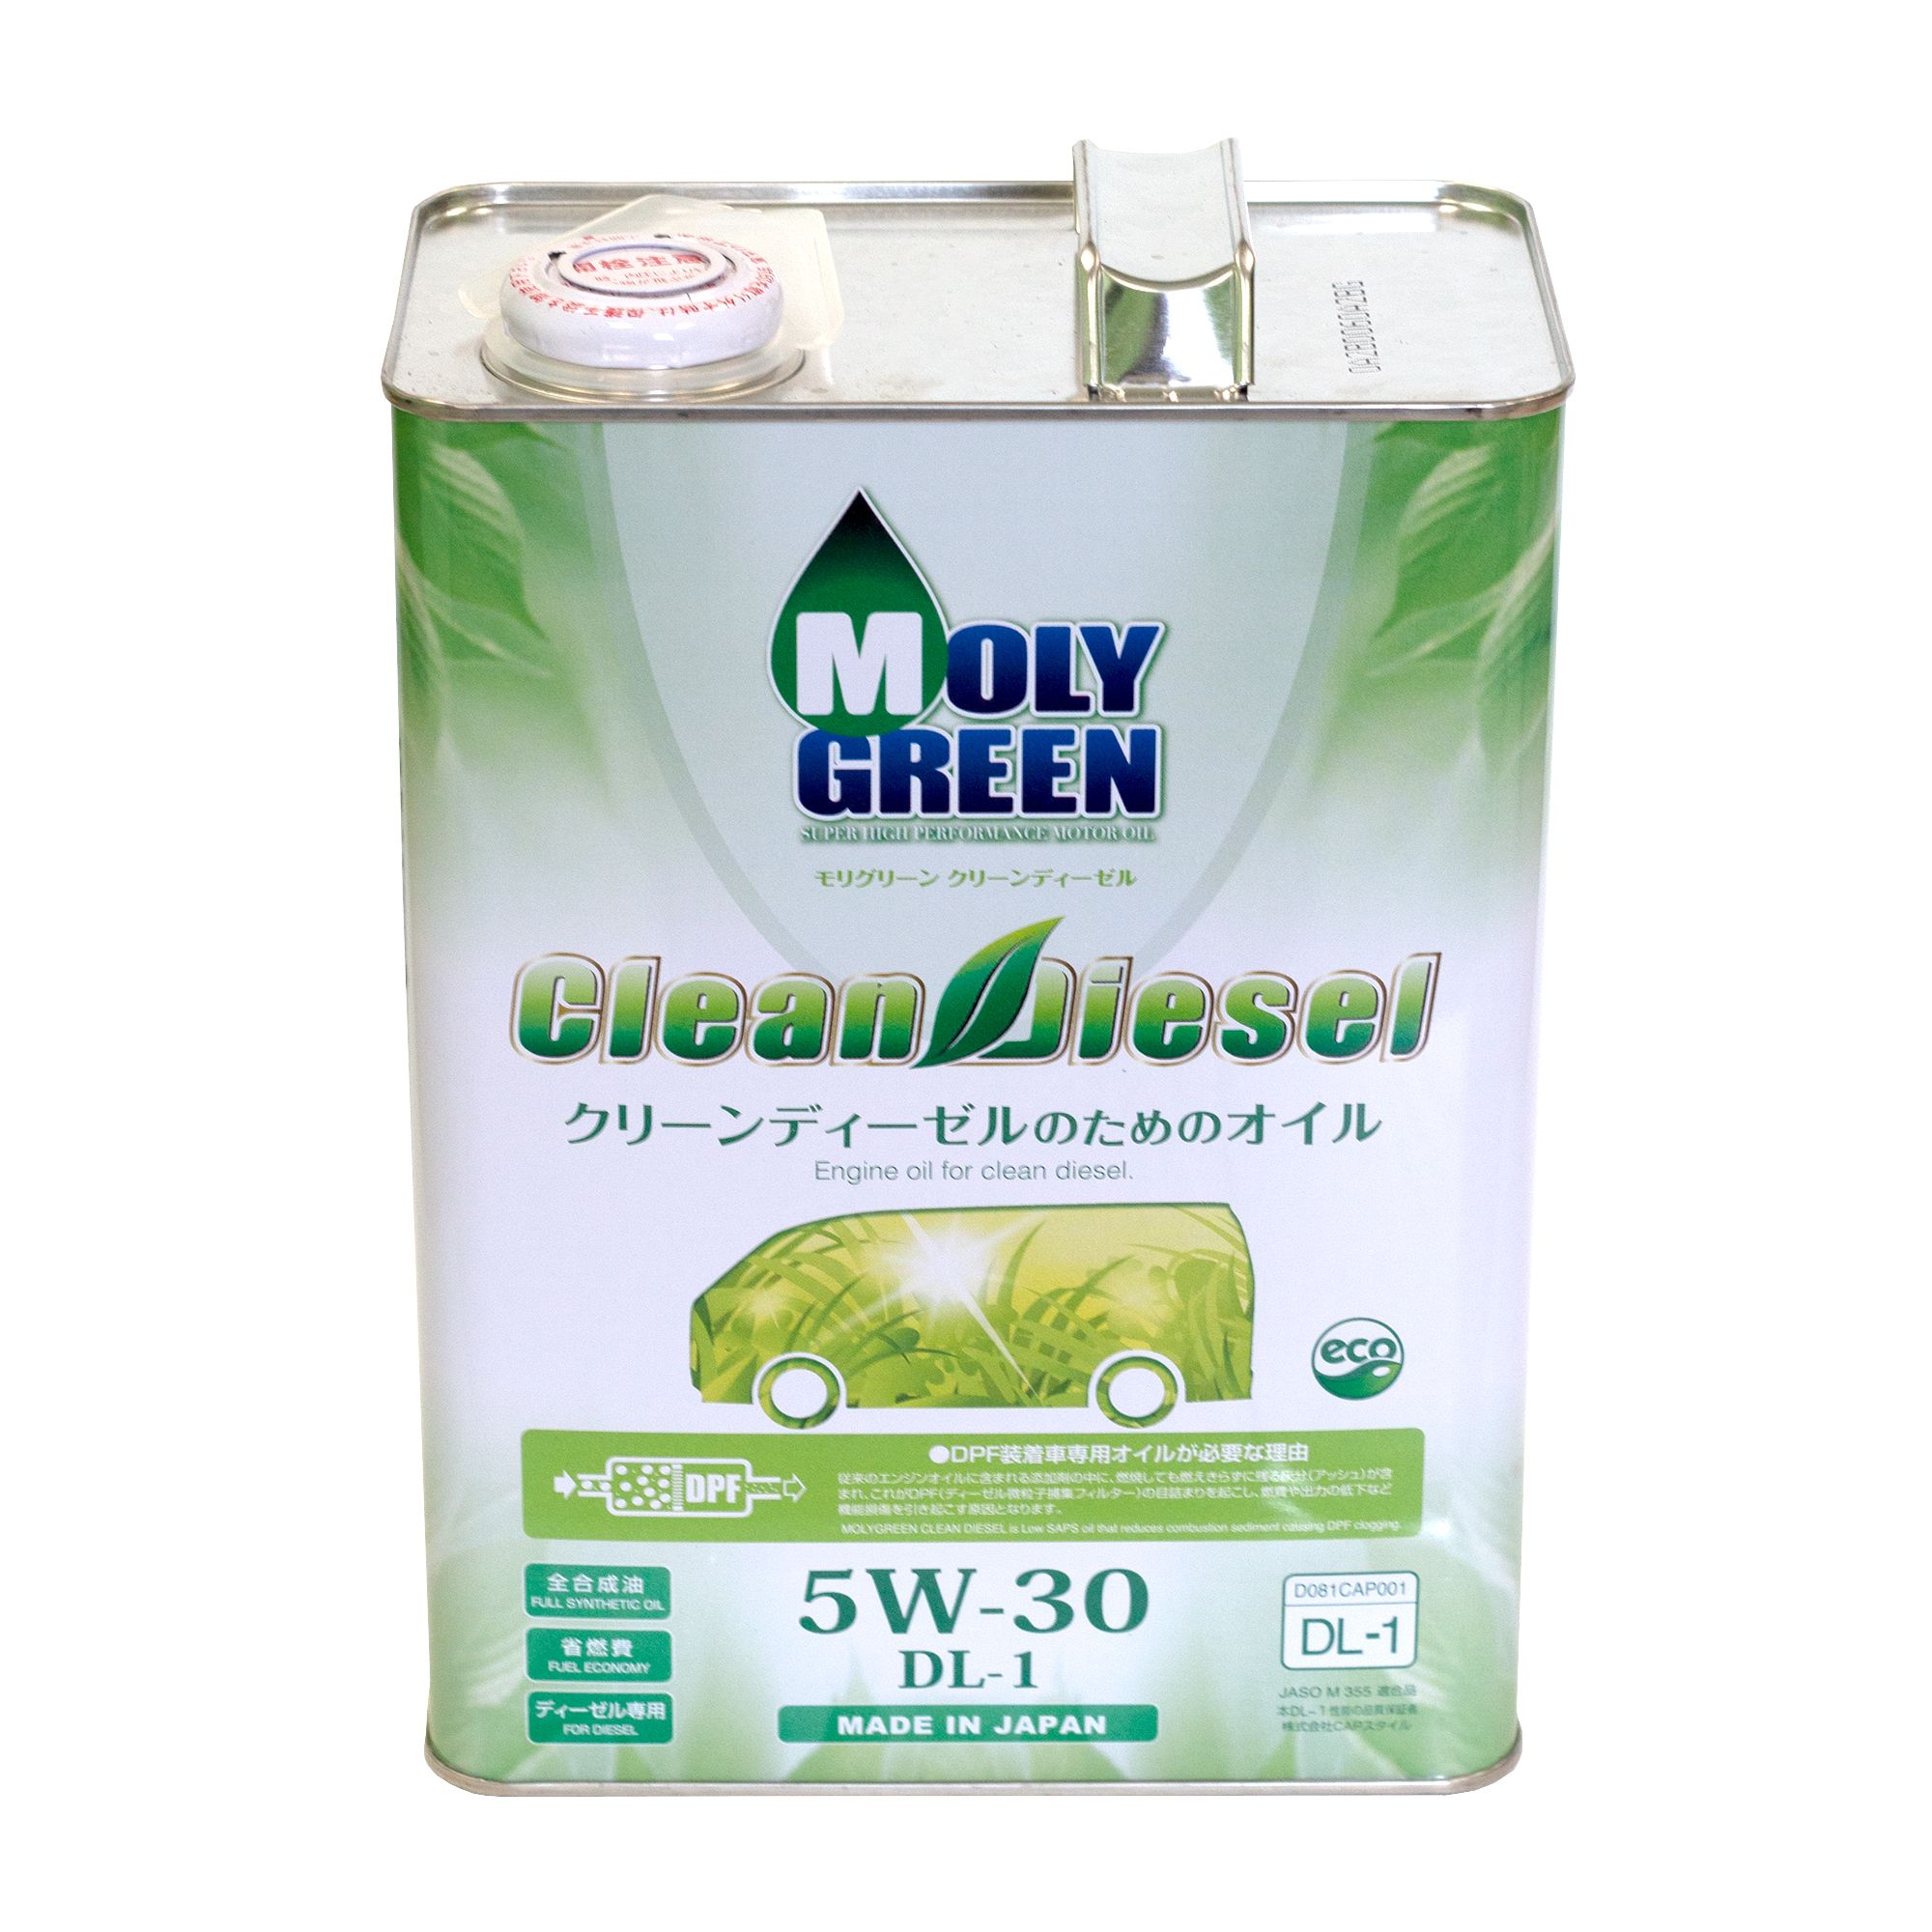 Моли грин 5w30 купить. Moly Green clean Diesel DL-1 5w30. Масло Moly Green 5w30. Молигрин дизельное 5/30. Моли Грин 5w30 4л.